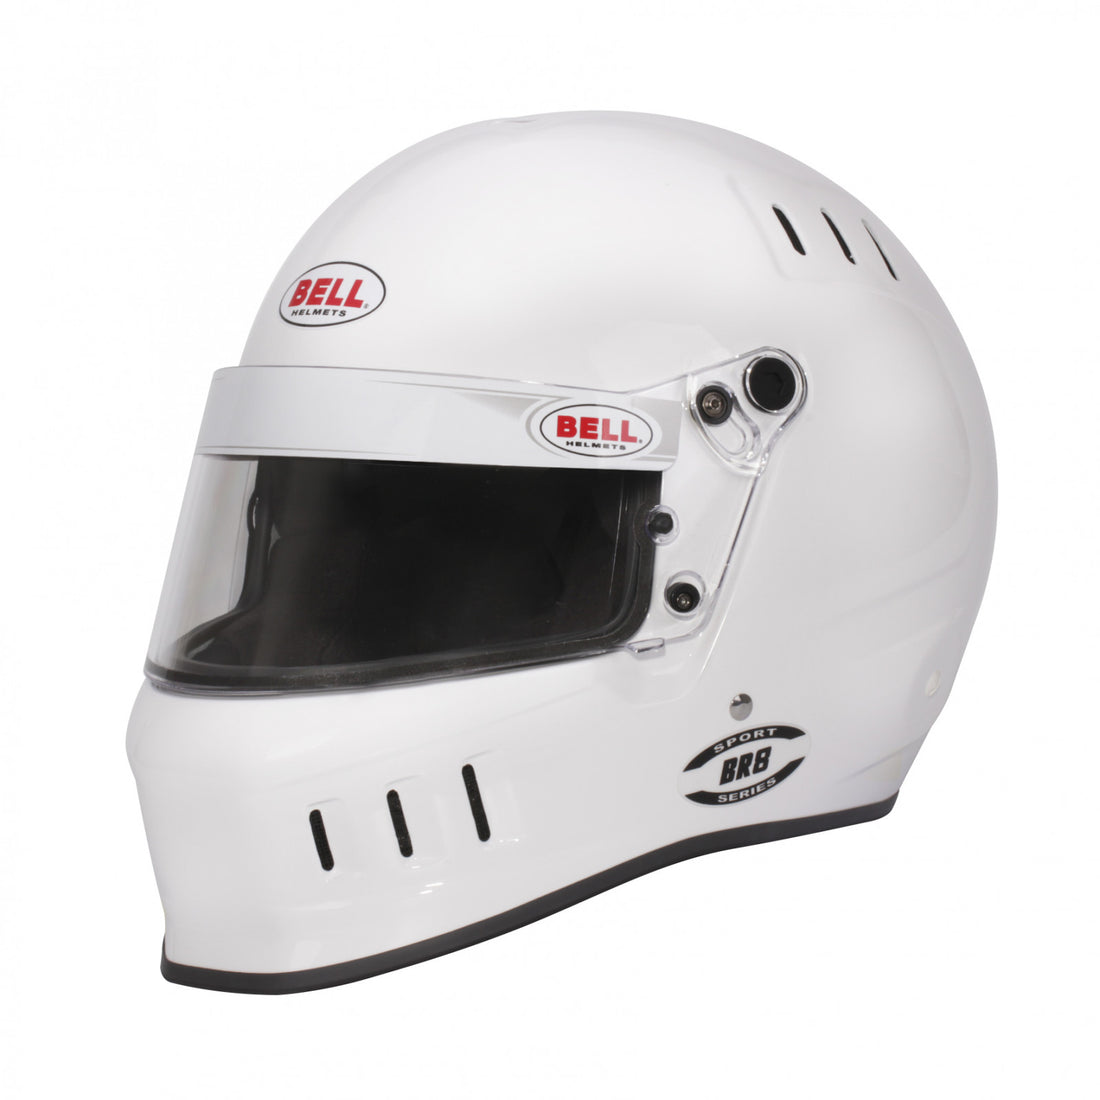 Bell BR8 White Helmet Size Small